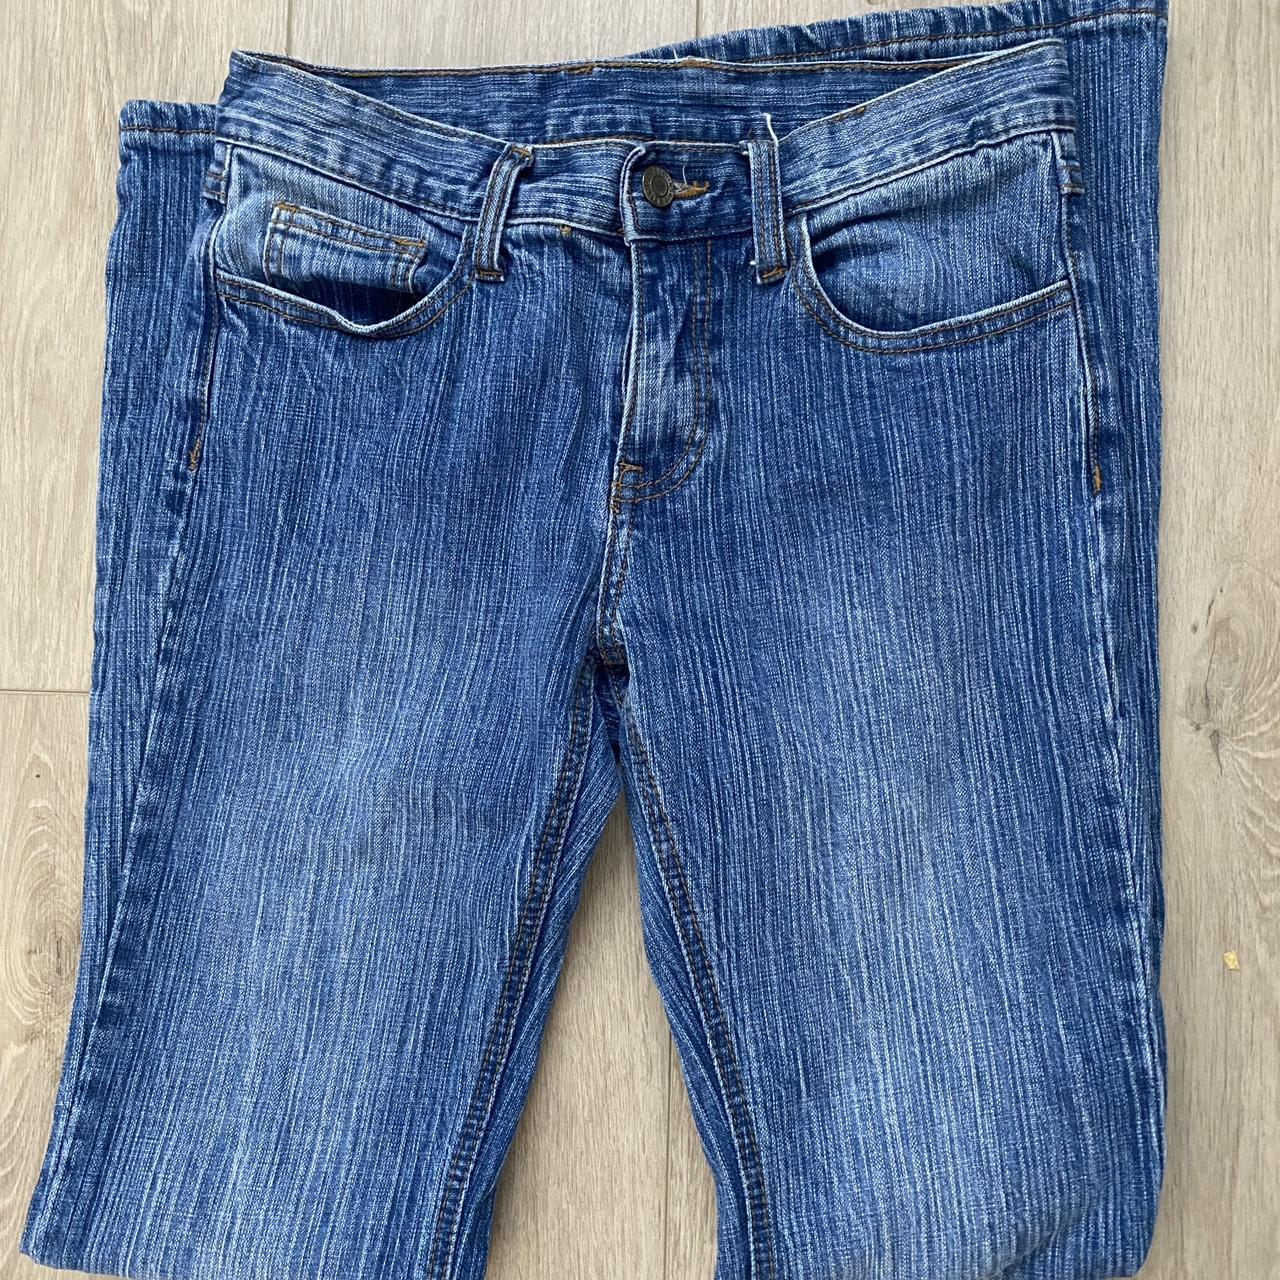 J Galt Shanghai low rise flare leg jeans in... - Depop